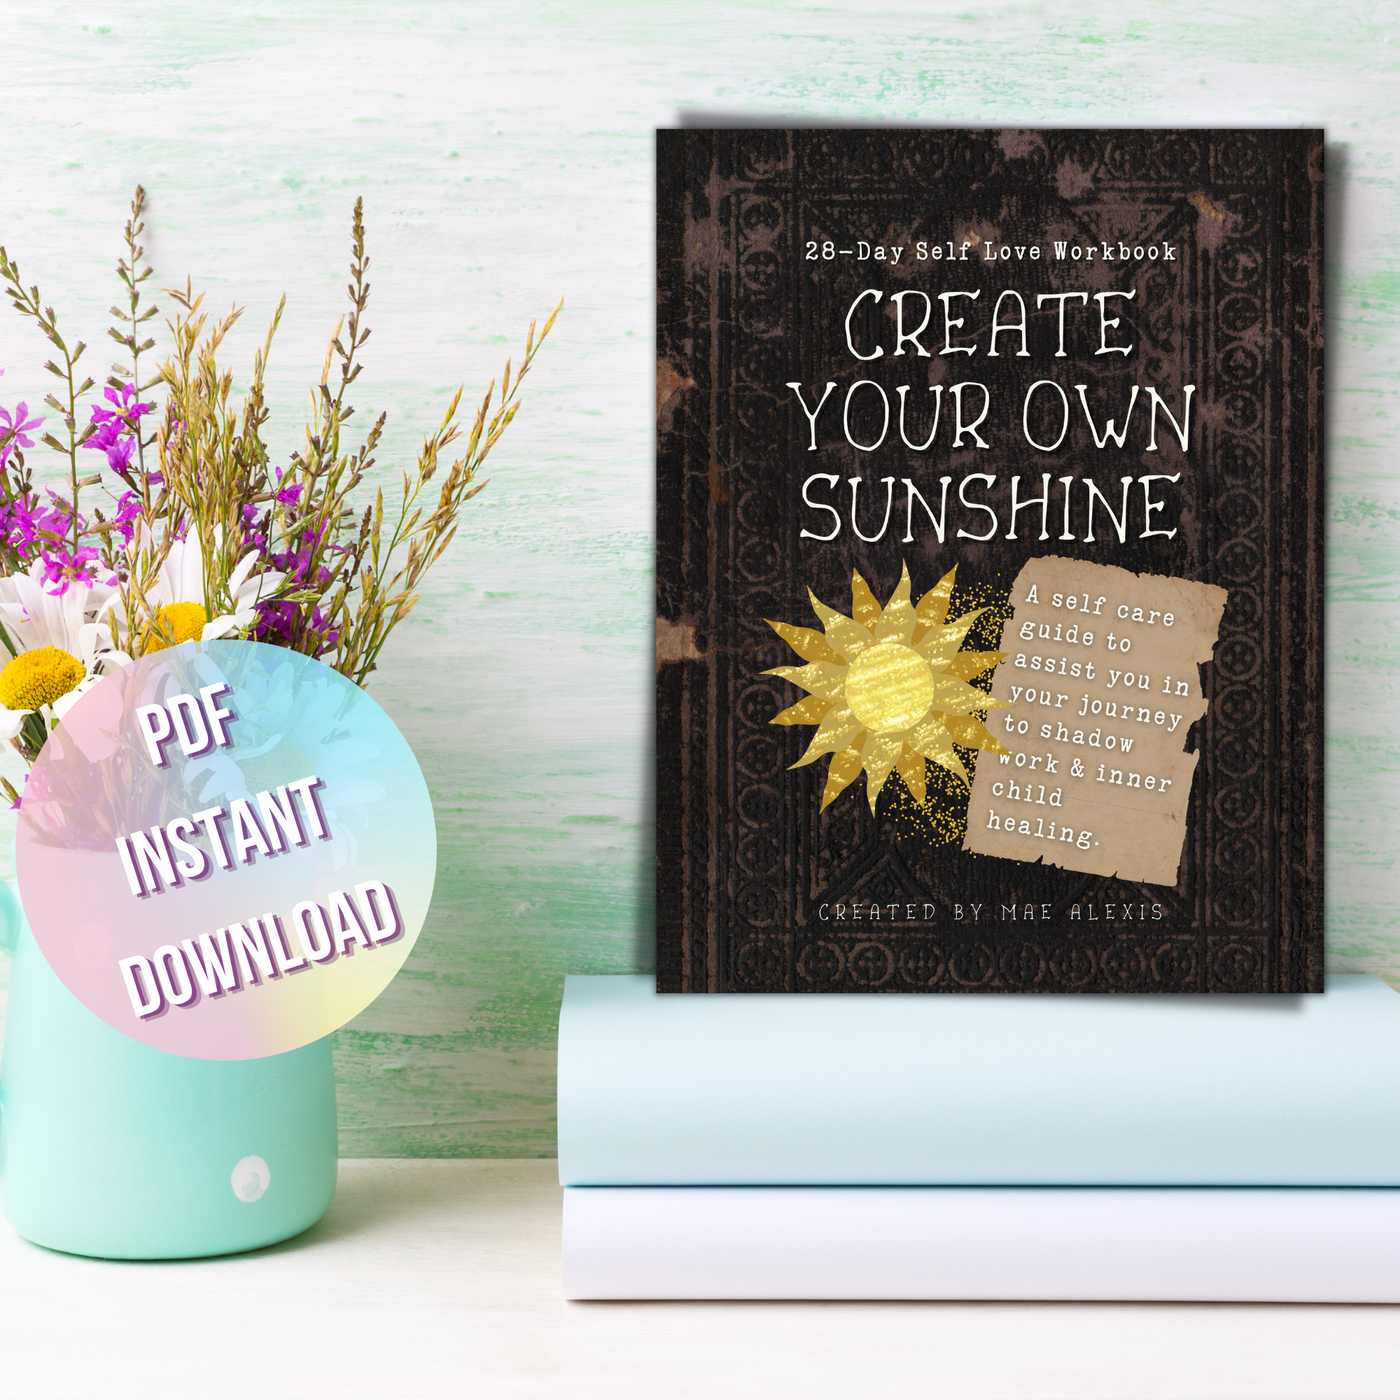 Create Your Own Sunshine: 28-Day Self Love Workbook